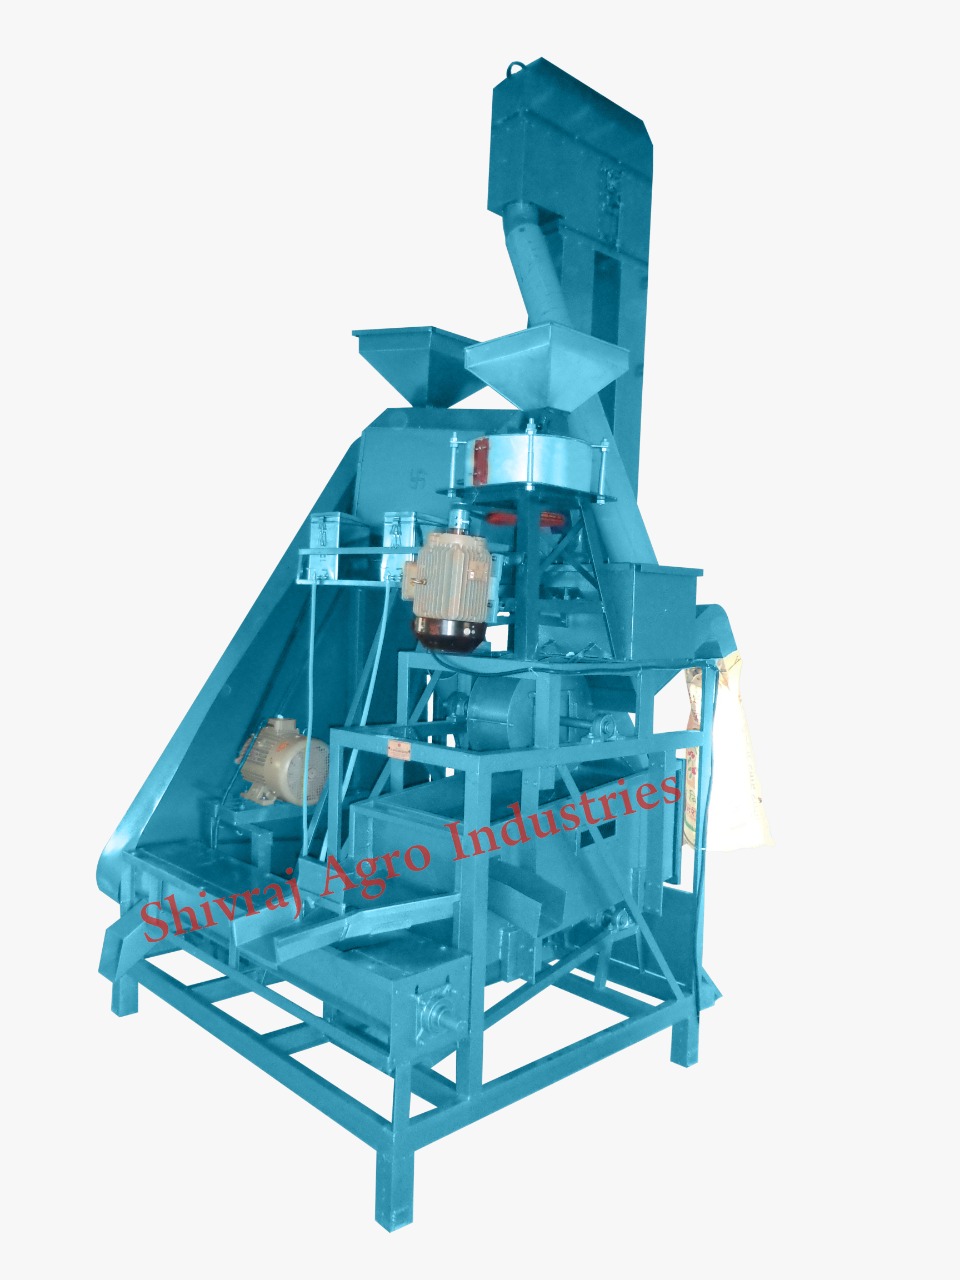 10 H.P. Shivraj Mini dal mill machine